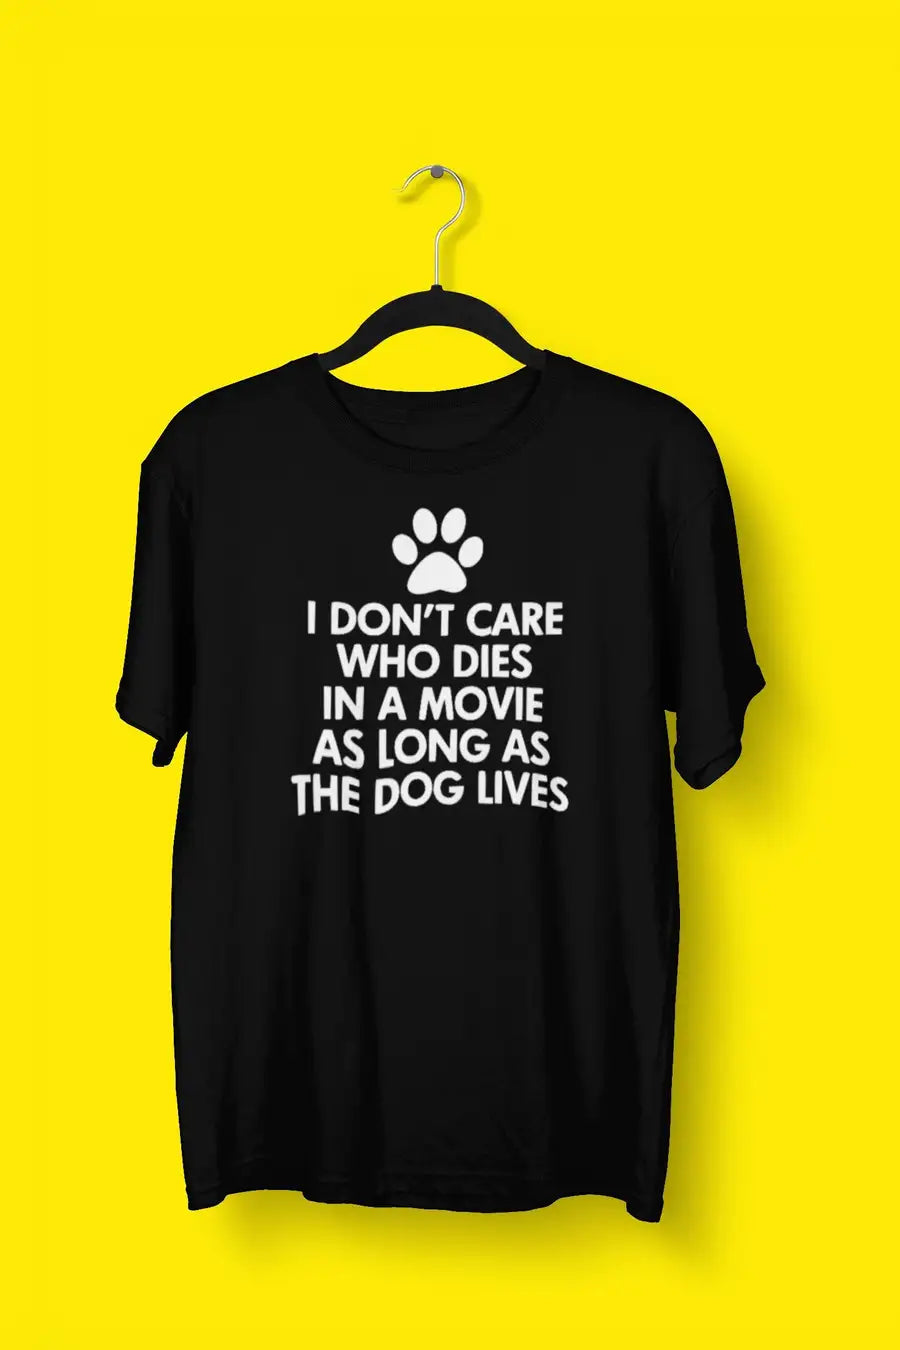 As Long As the Dog Lives T Shirt for Men and Women | Premium Design | Catch My Drift India - Catch My Drift India Clothing black, clothing, dog, made in india, shirt, t shirt, tshirt